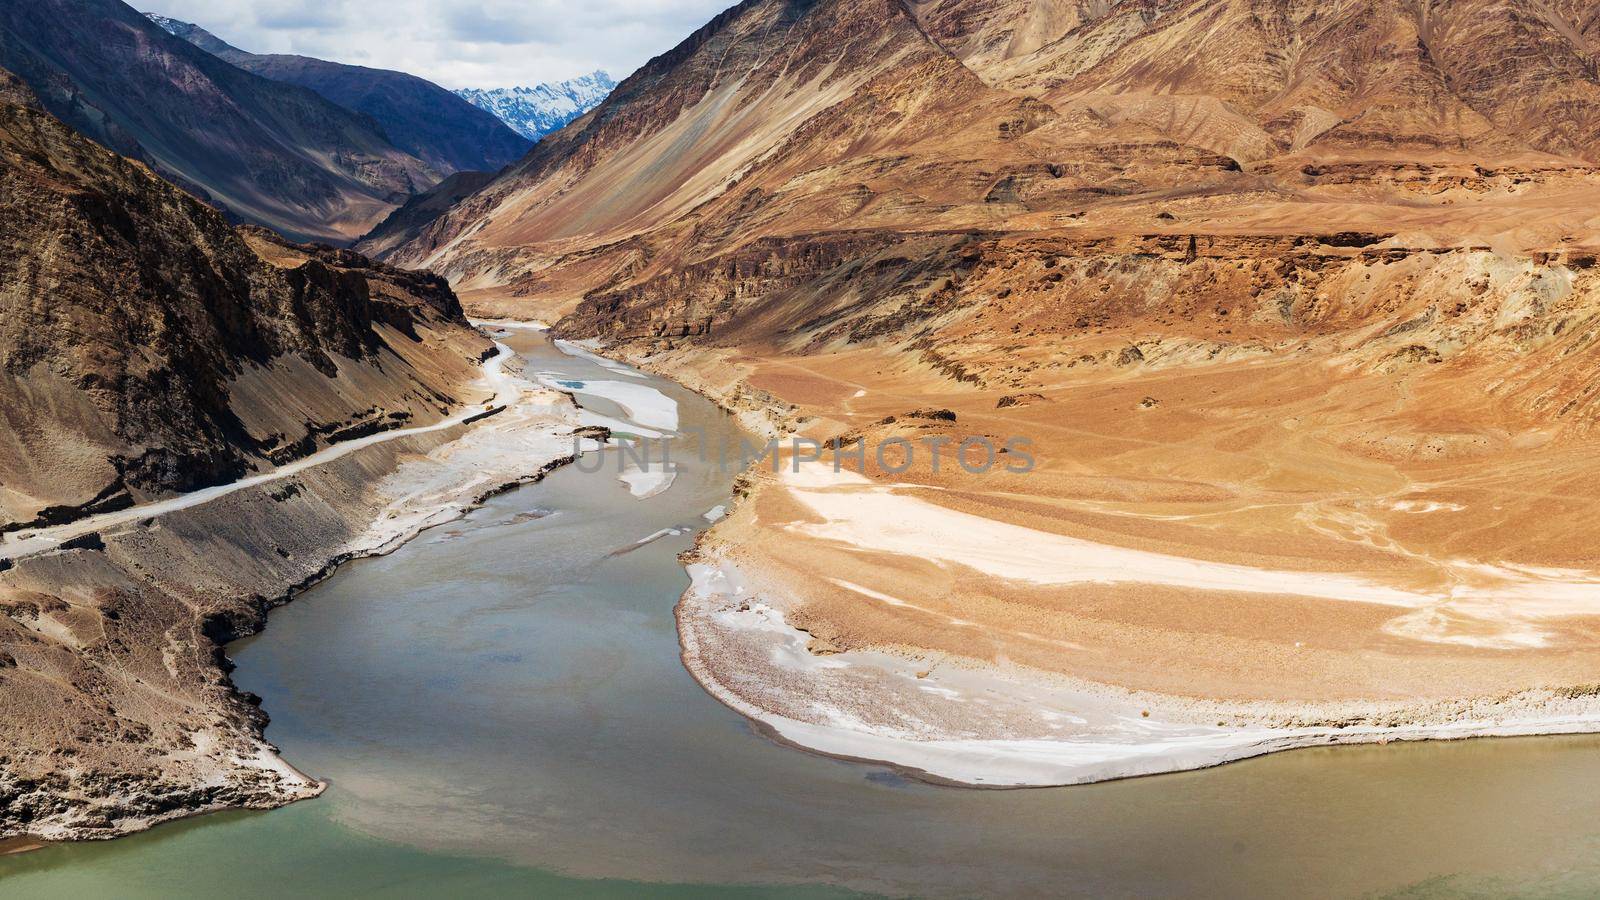 Confluence of Zanskar and Indus rivers - Leh, Ladakh, India.
 by Nuamfolio